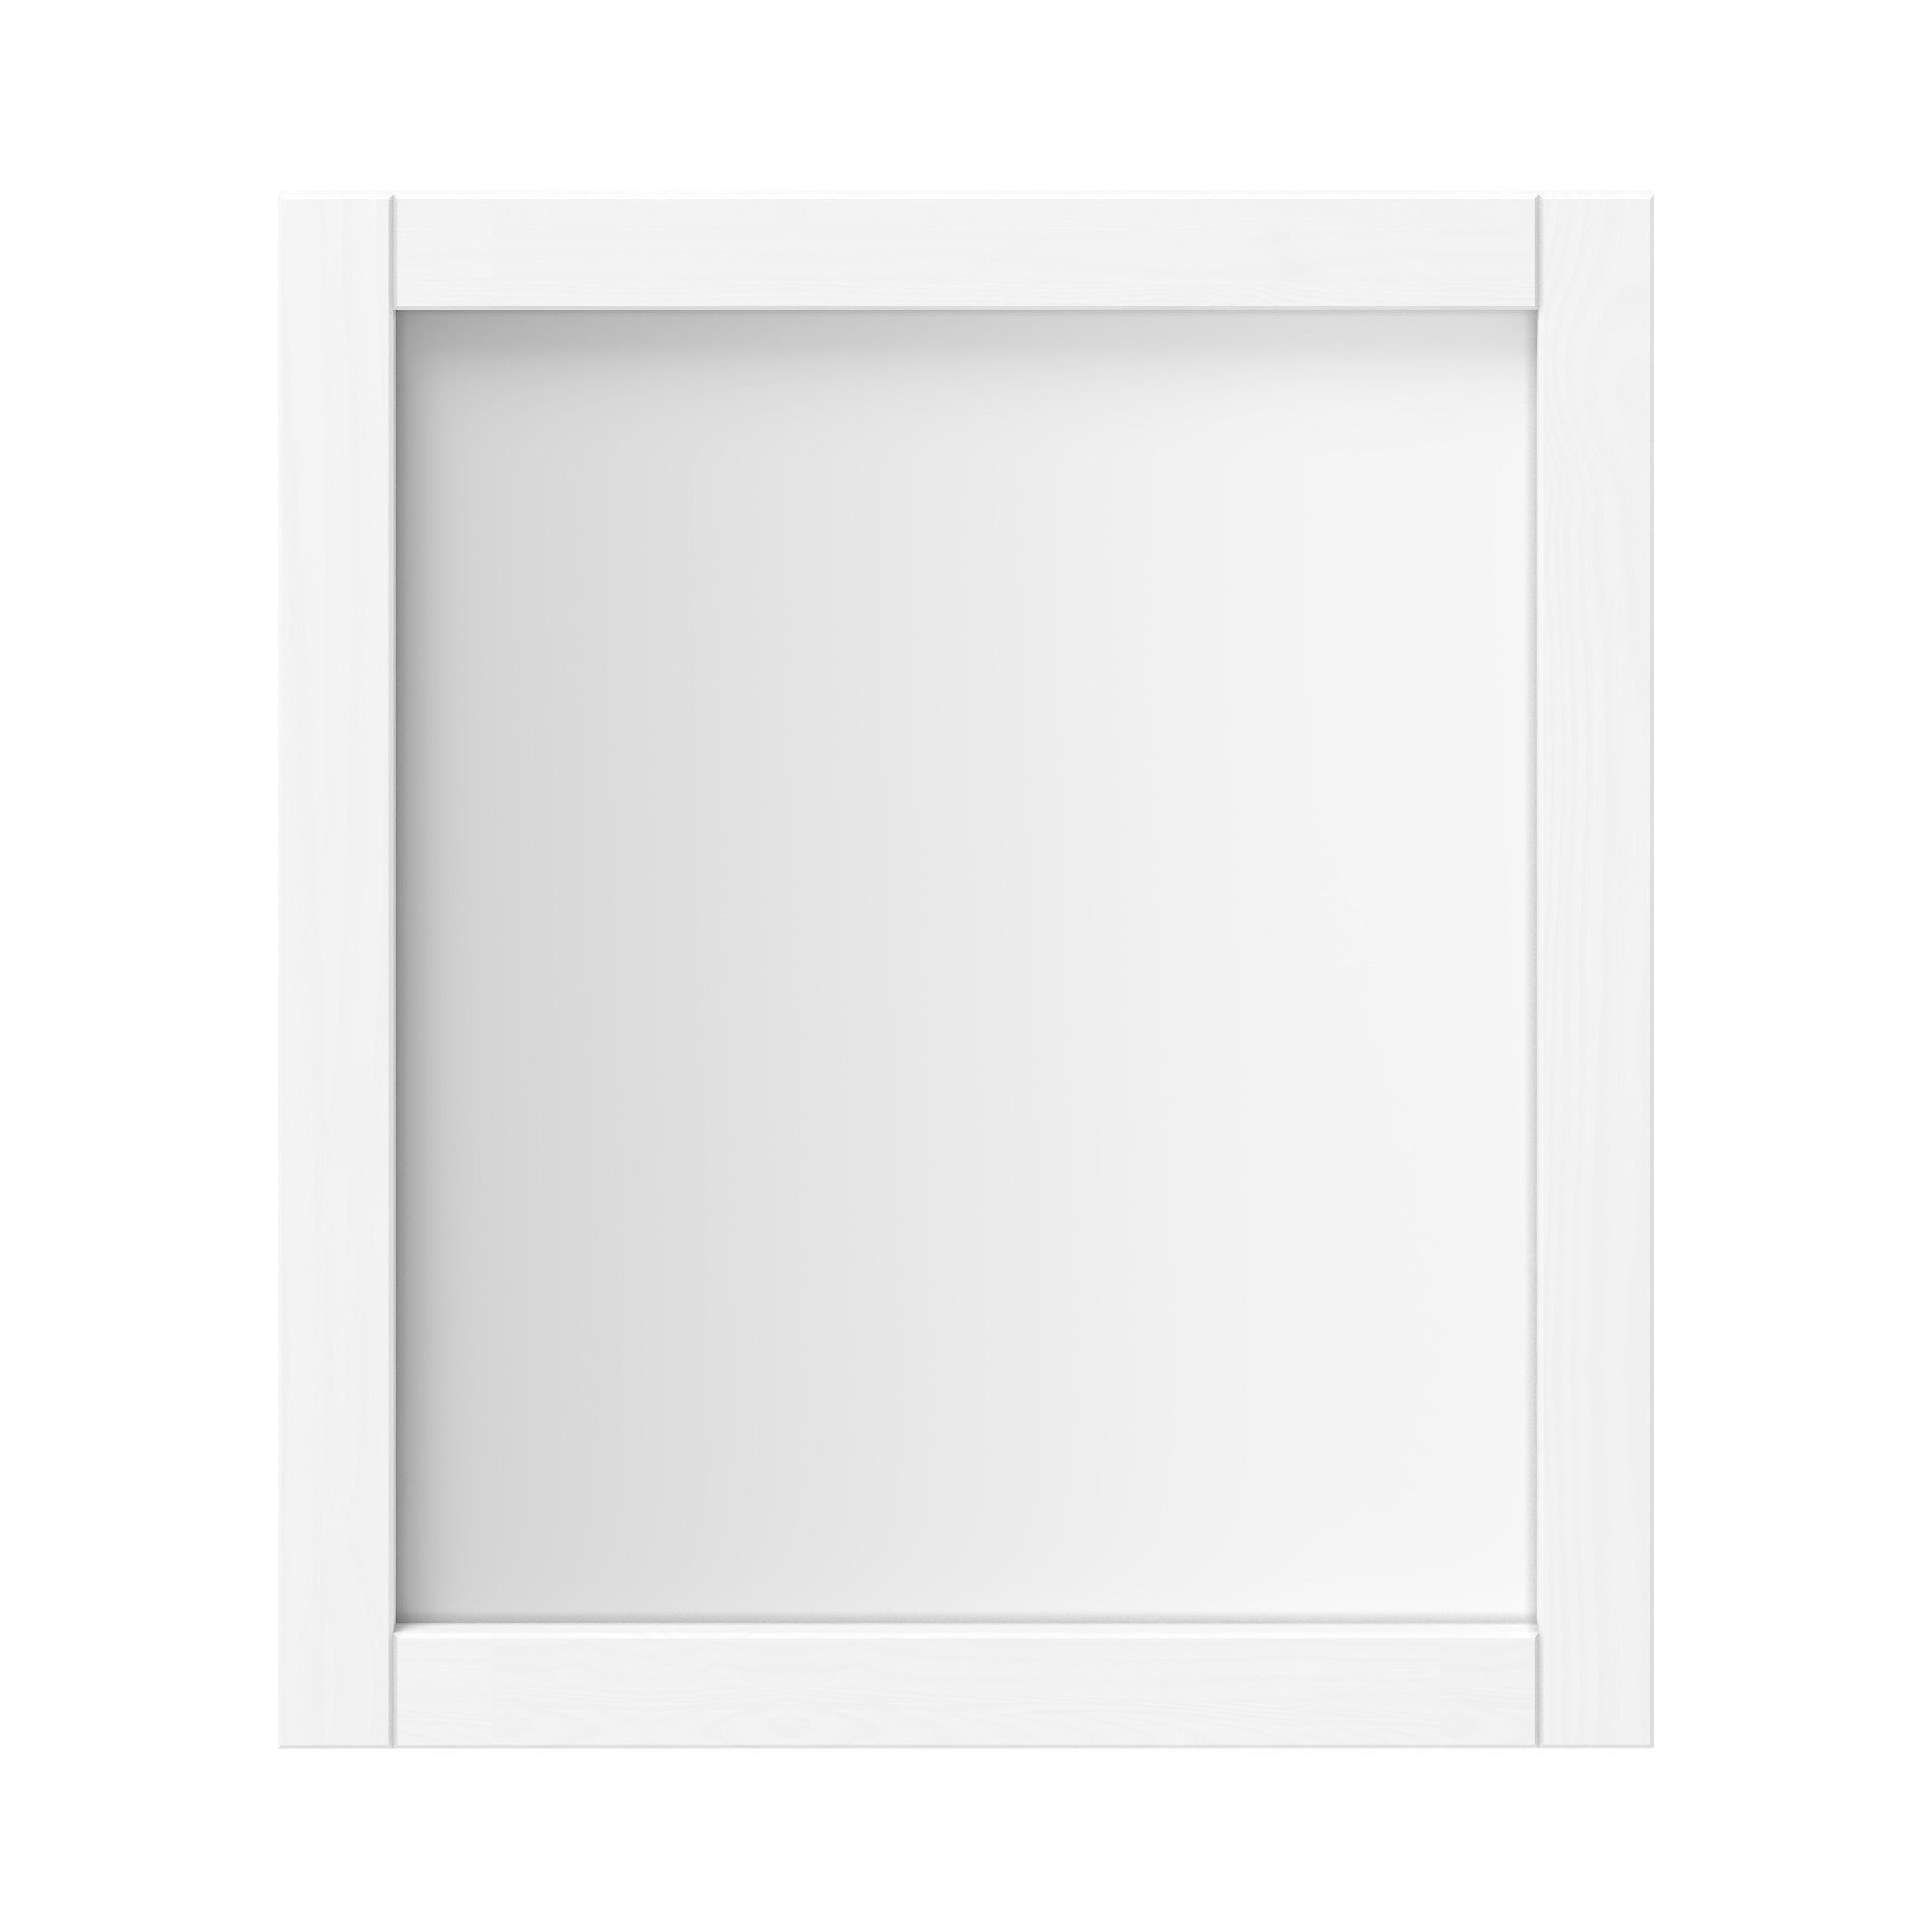 Woodroom Spiegel Valencia, Kiefer massiv 62x70x3 Weiß | lackiert, cm BxHxT weiß